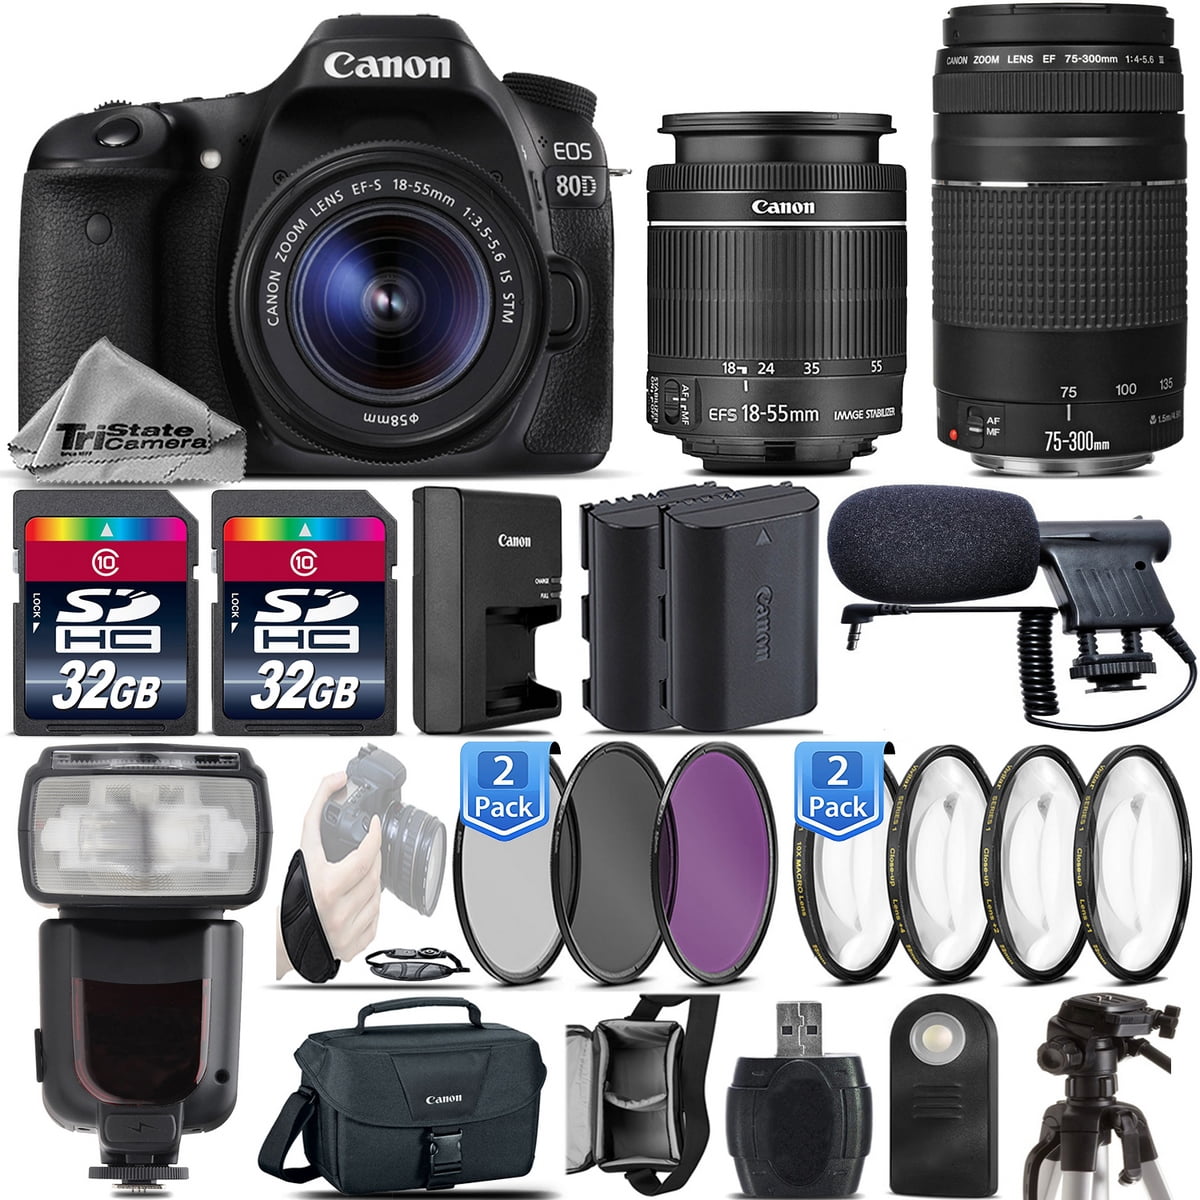 Canon 80D DSLR NFC 1080p DIGIC 6 Camera + 18-55mm IS STM + 75-300mm III Walmart.com